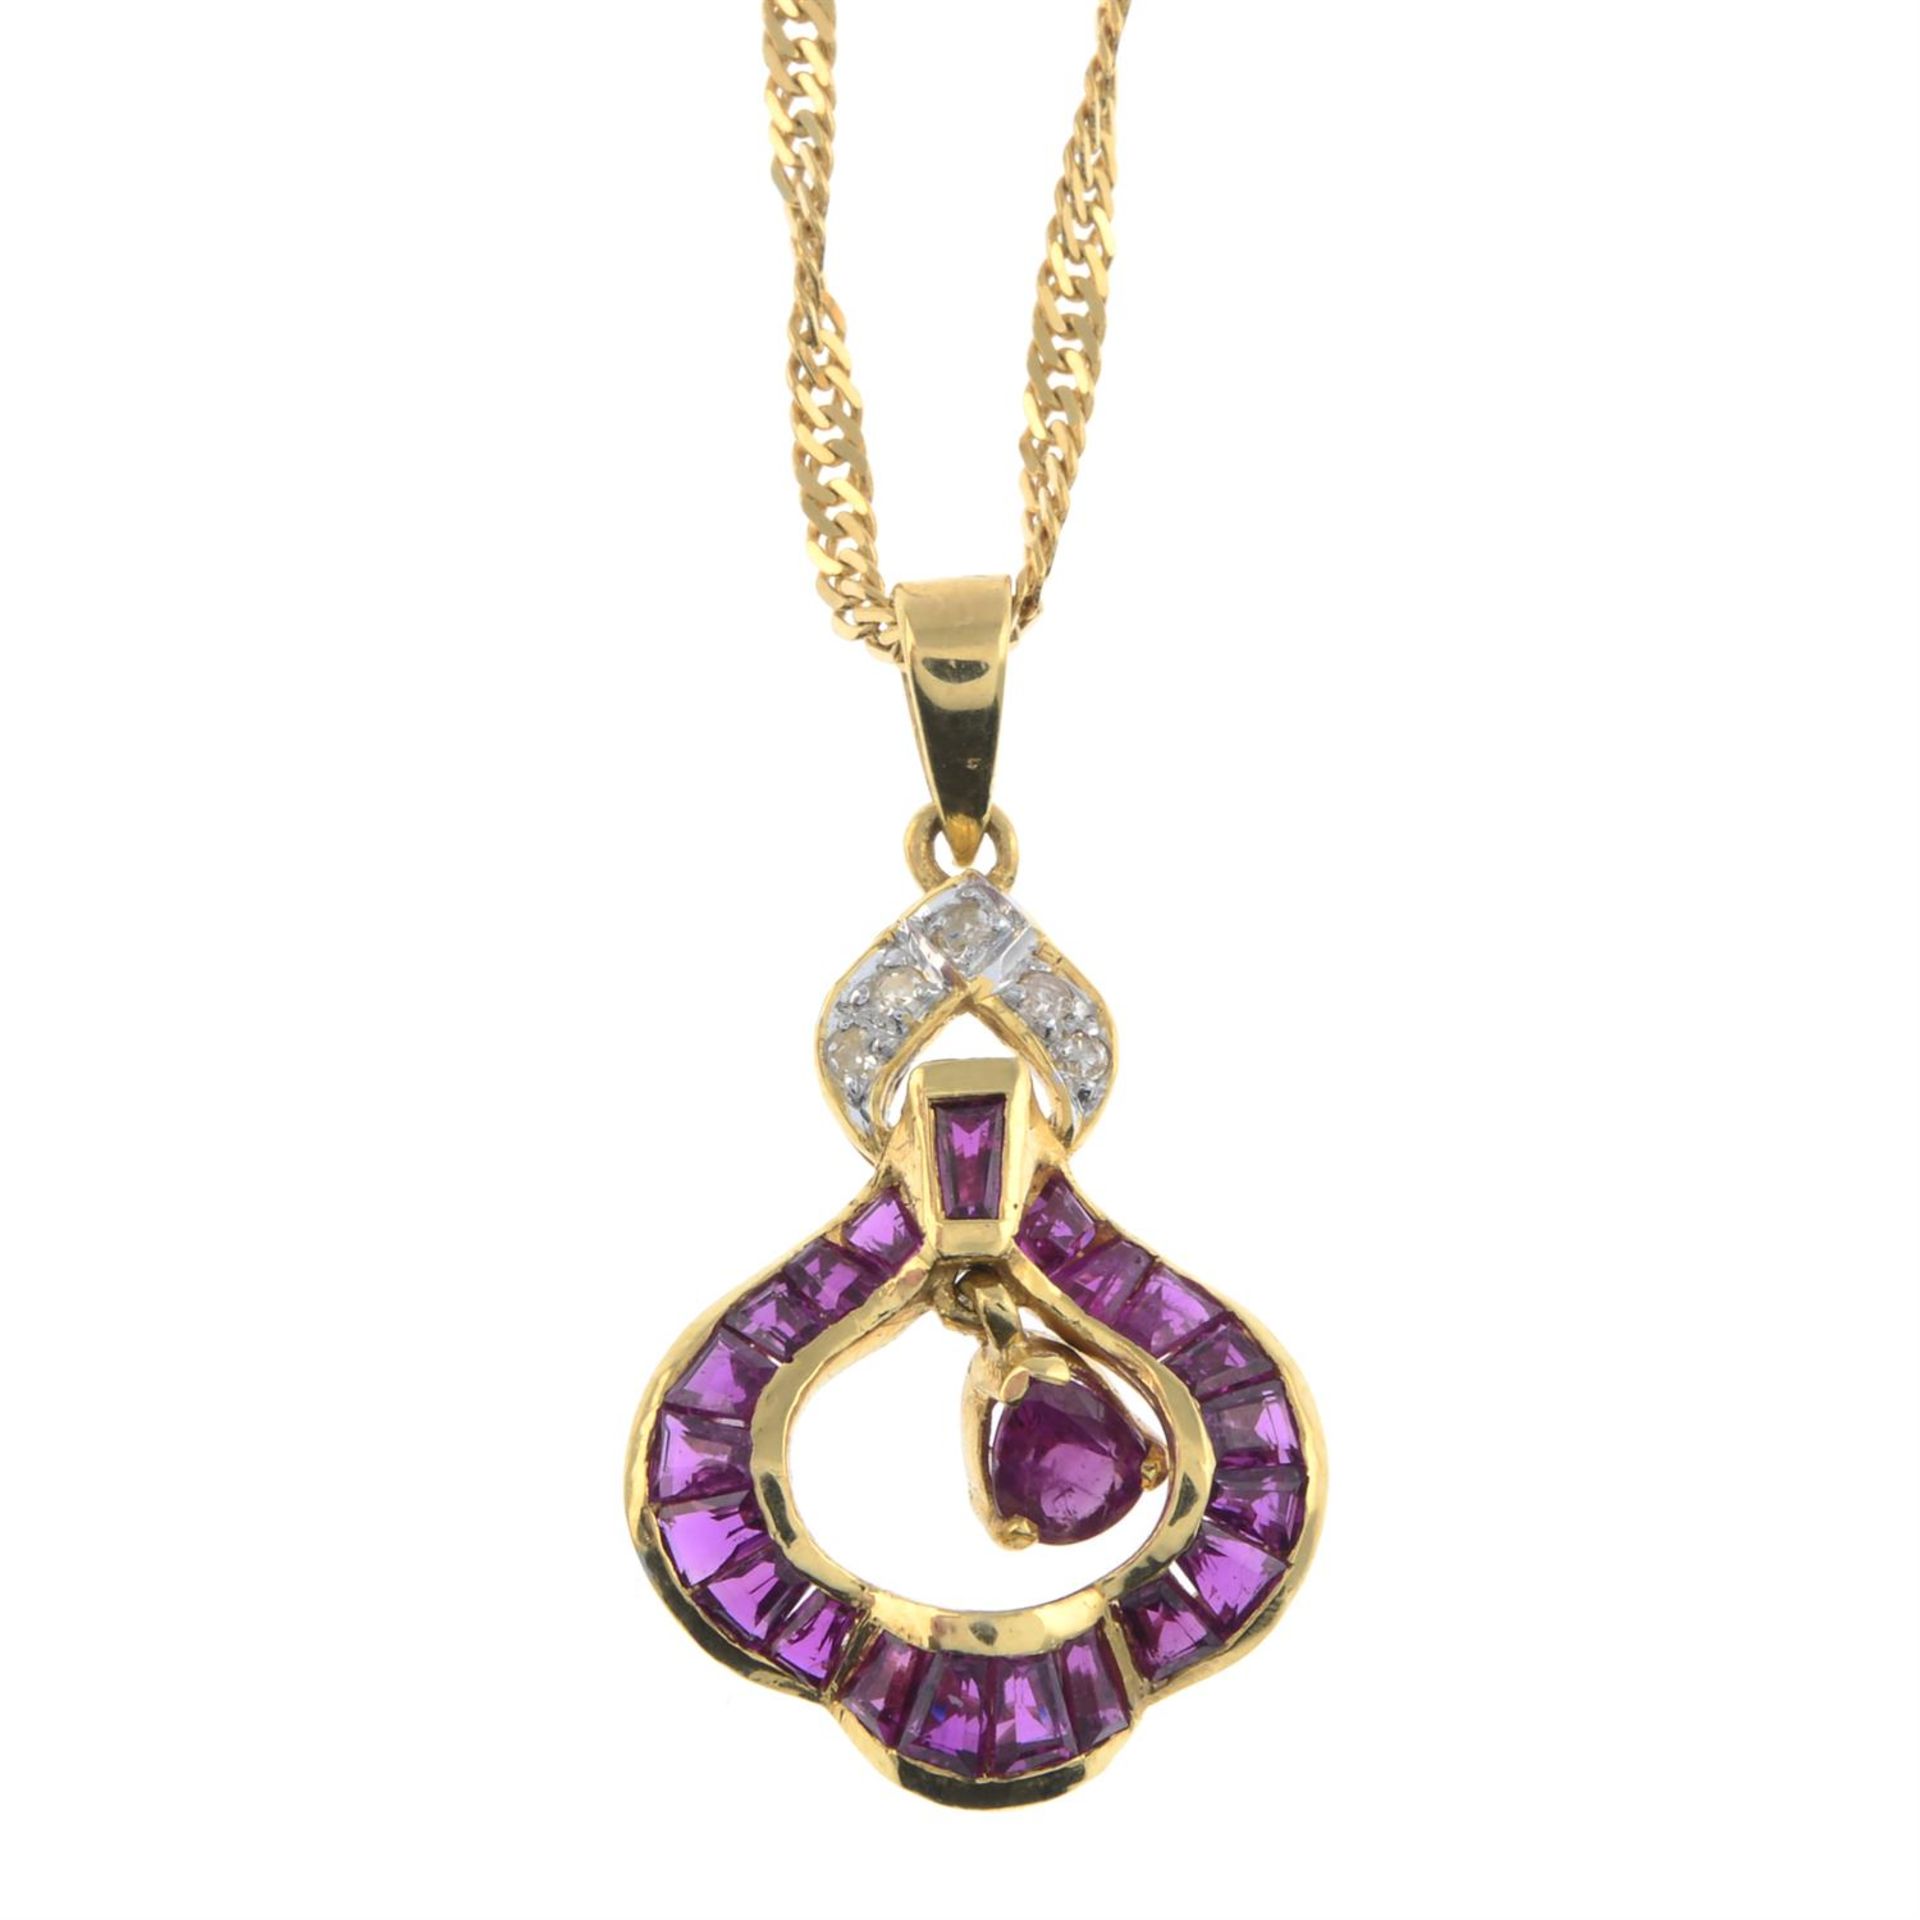 Ruby & diamond pendant, with chain